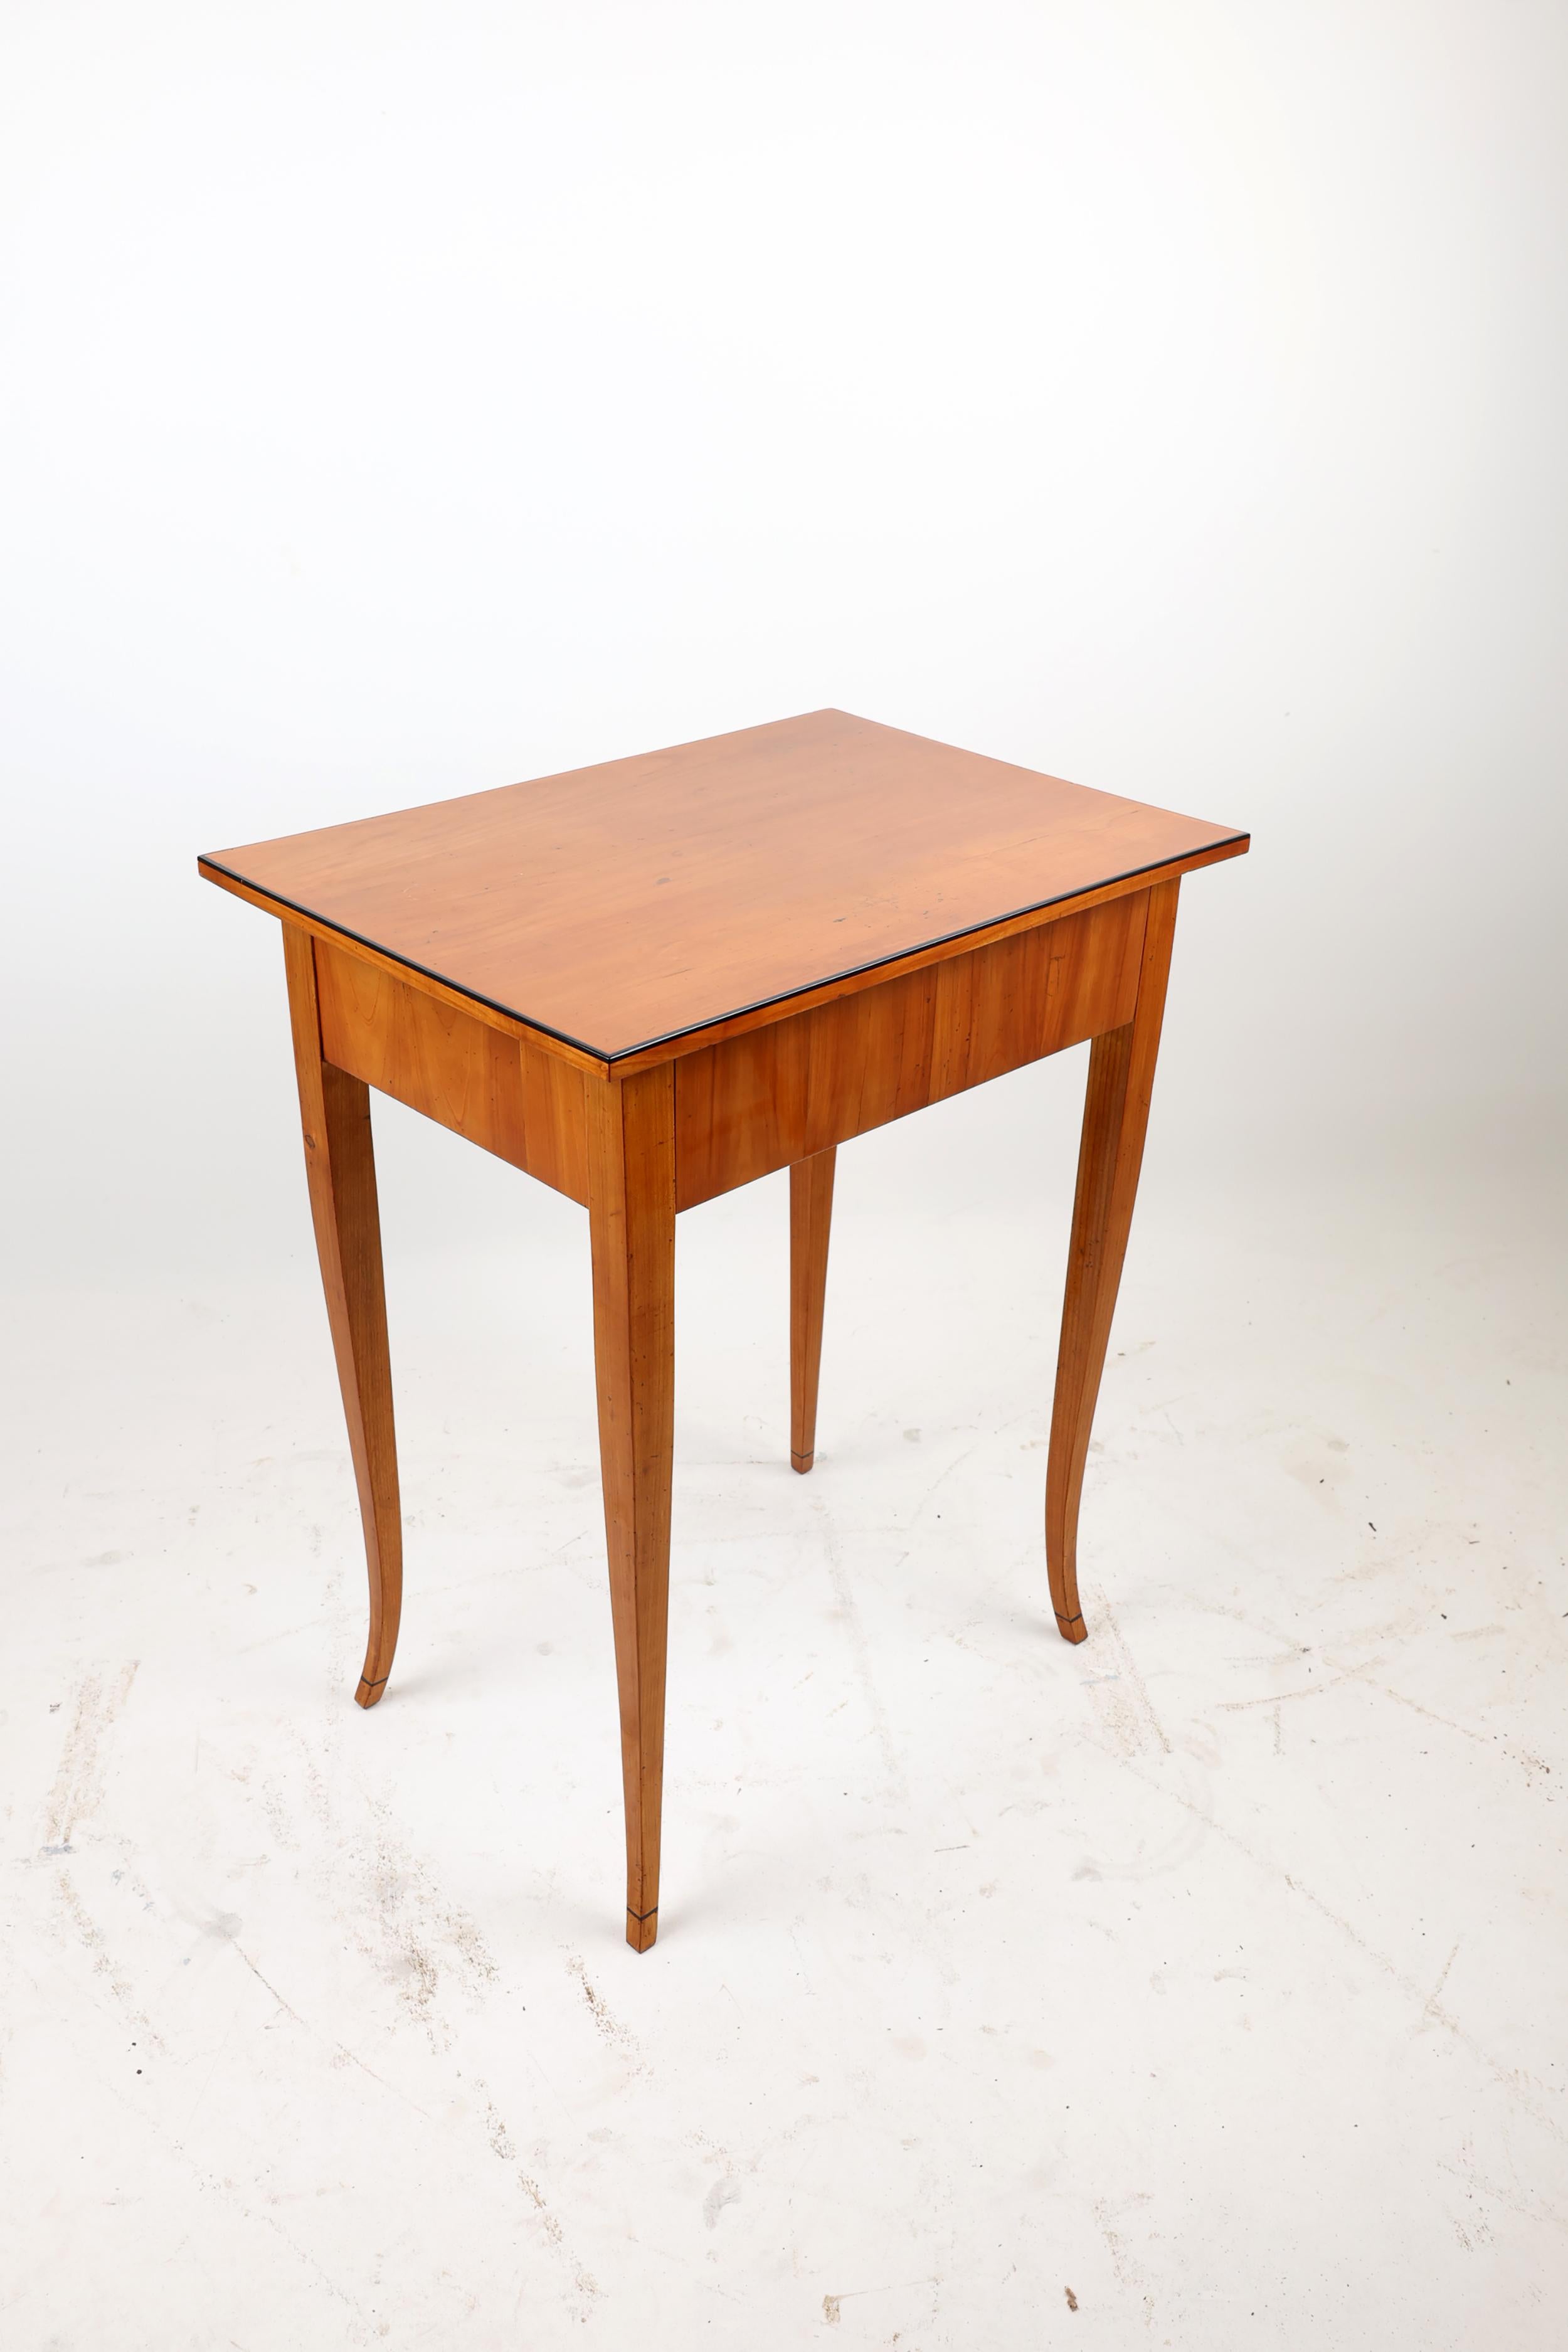 Early 19th Century Biedermeier Side Table For Sale 5